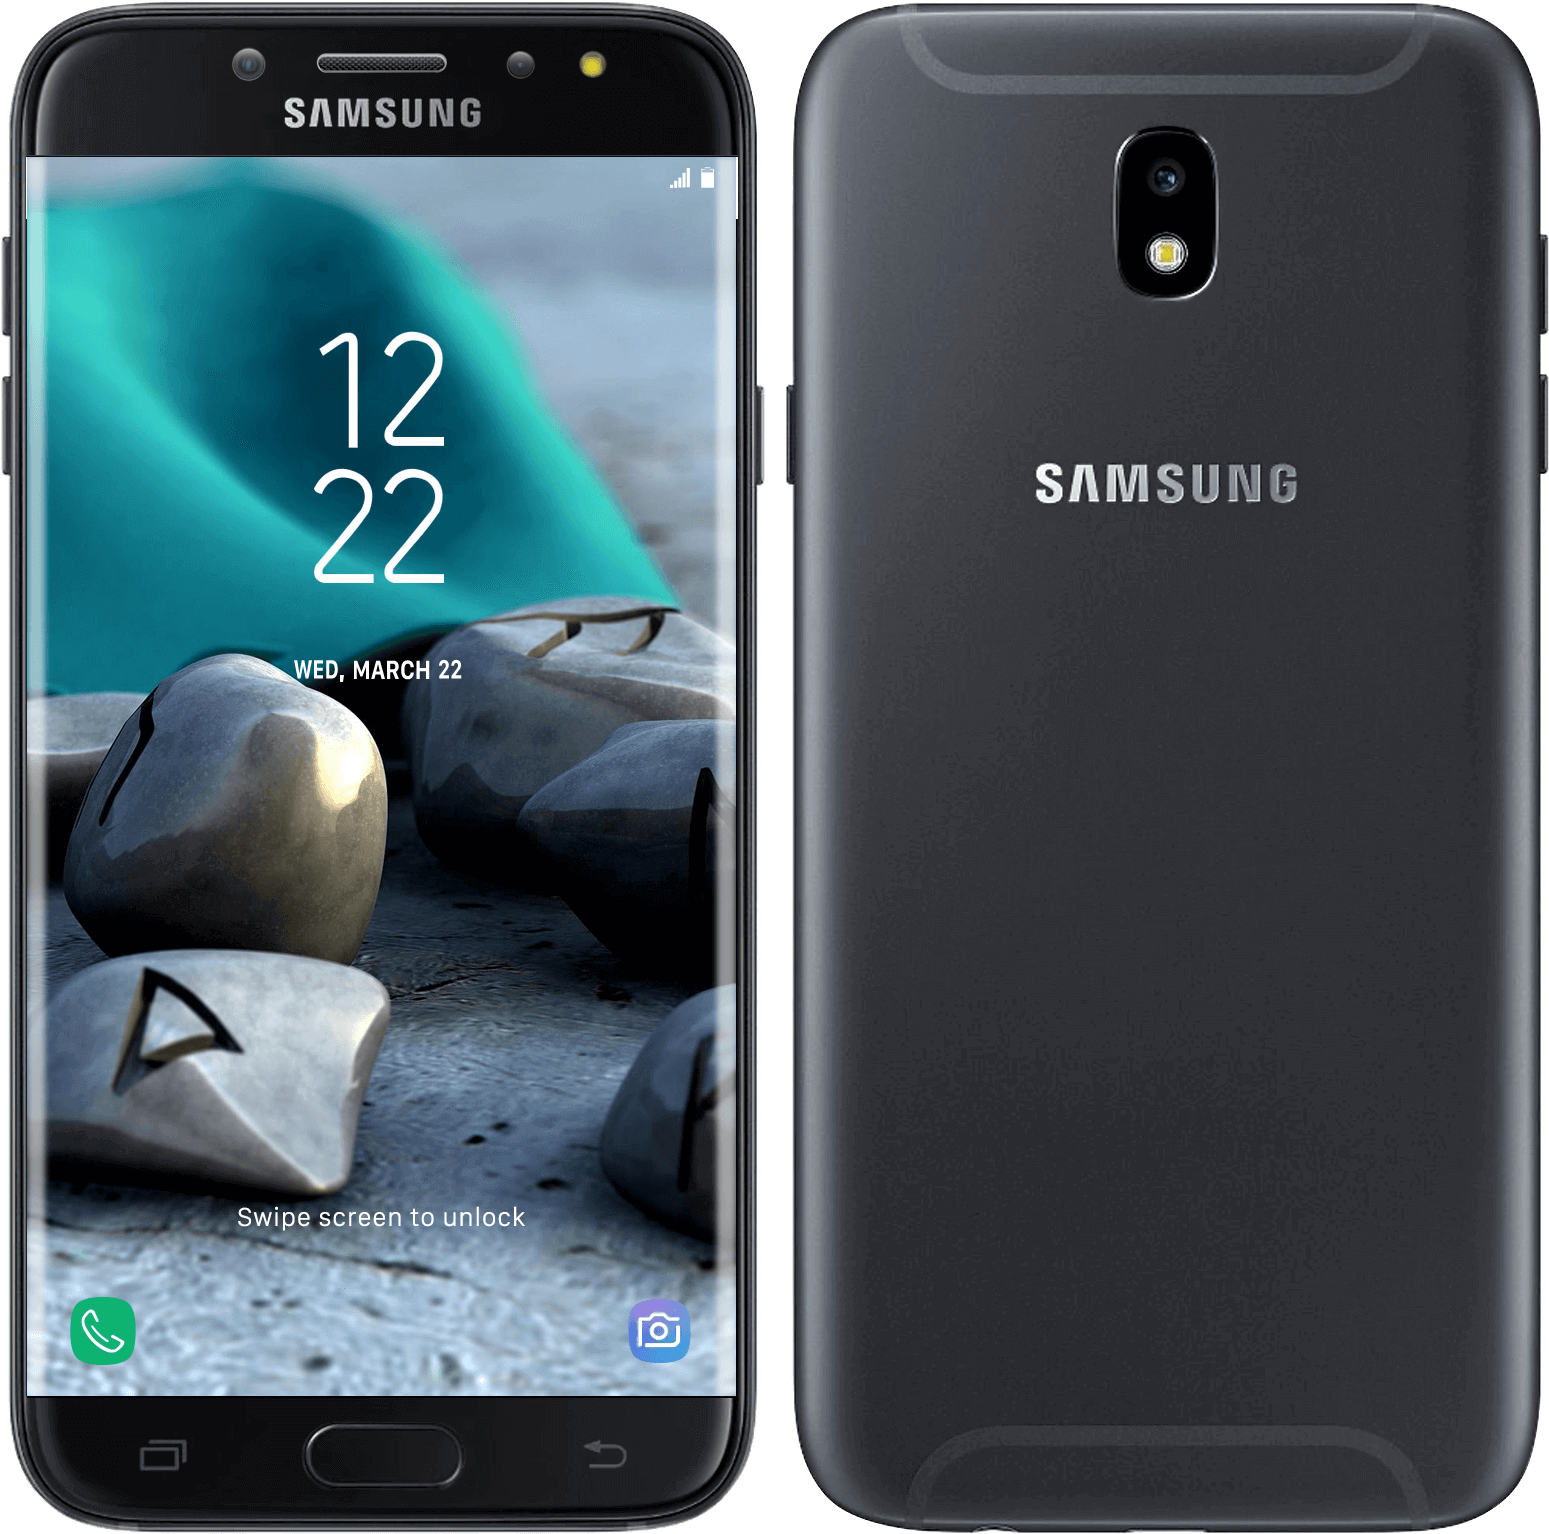 Samsung Galaxy J7 Pro 2017 SM-J730G 32GB (As New)